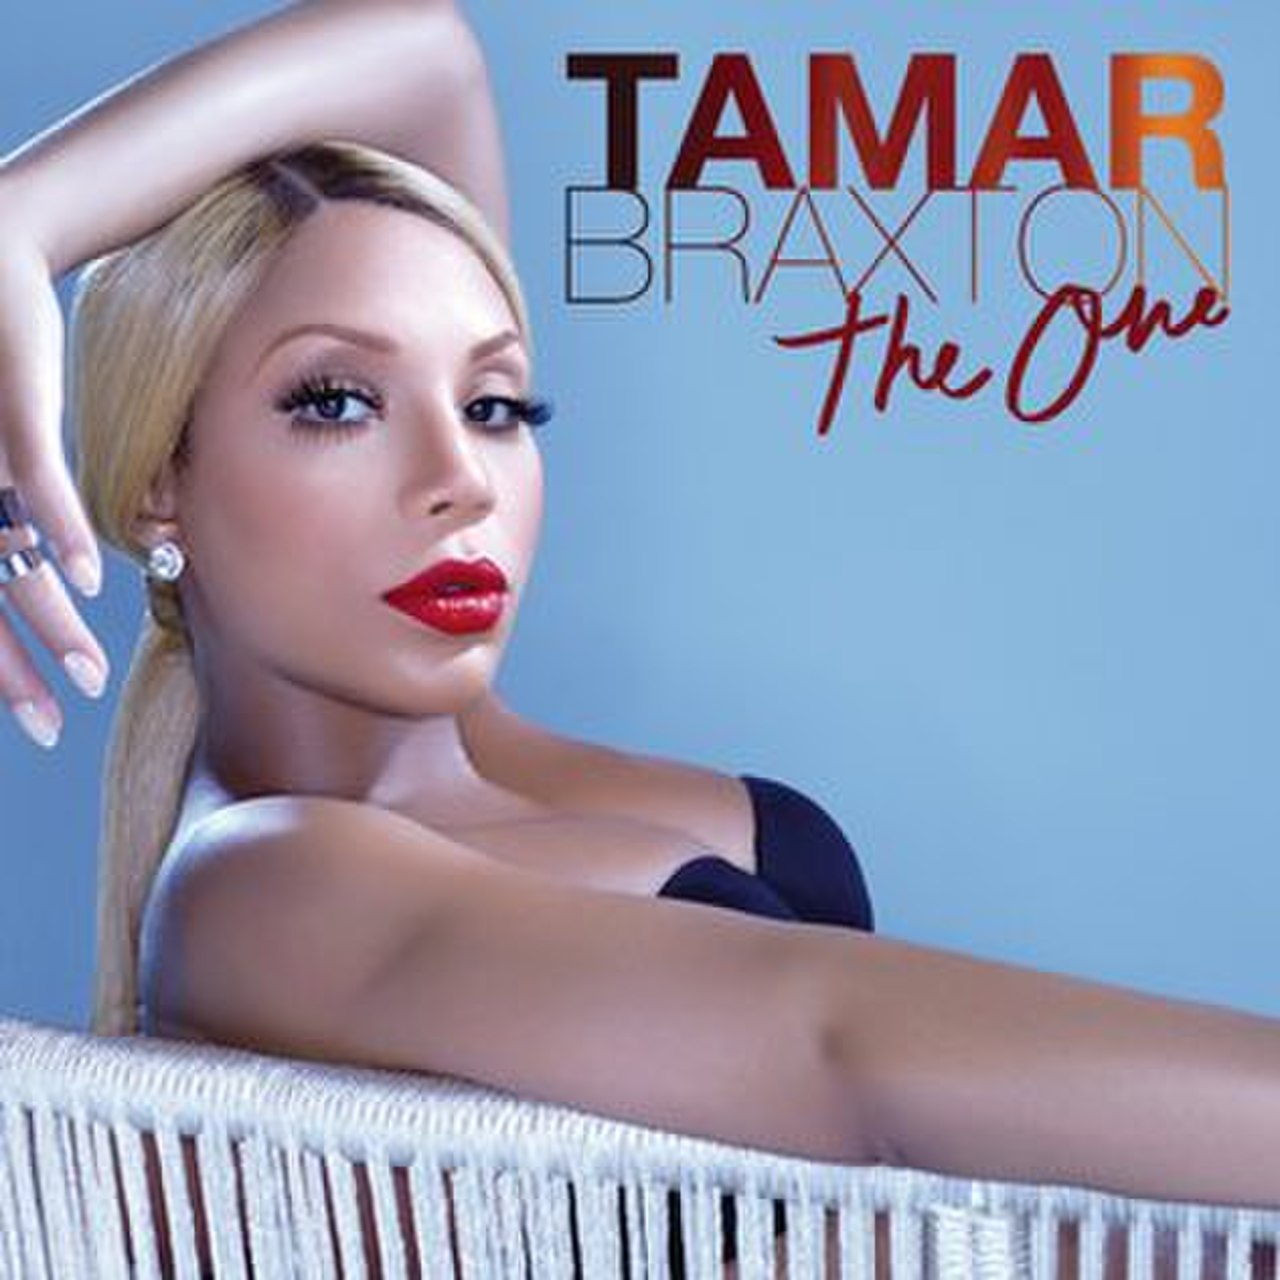 Tamar Braxton The One cover artwork